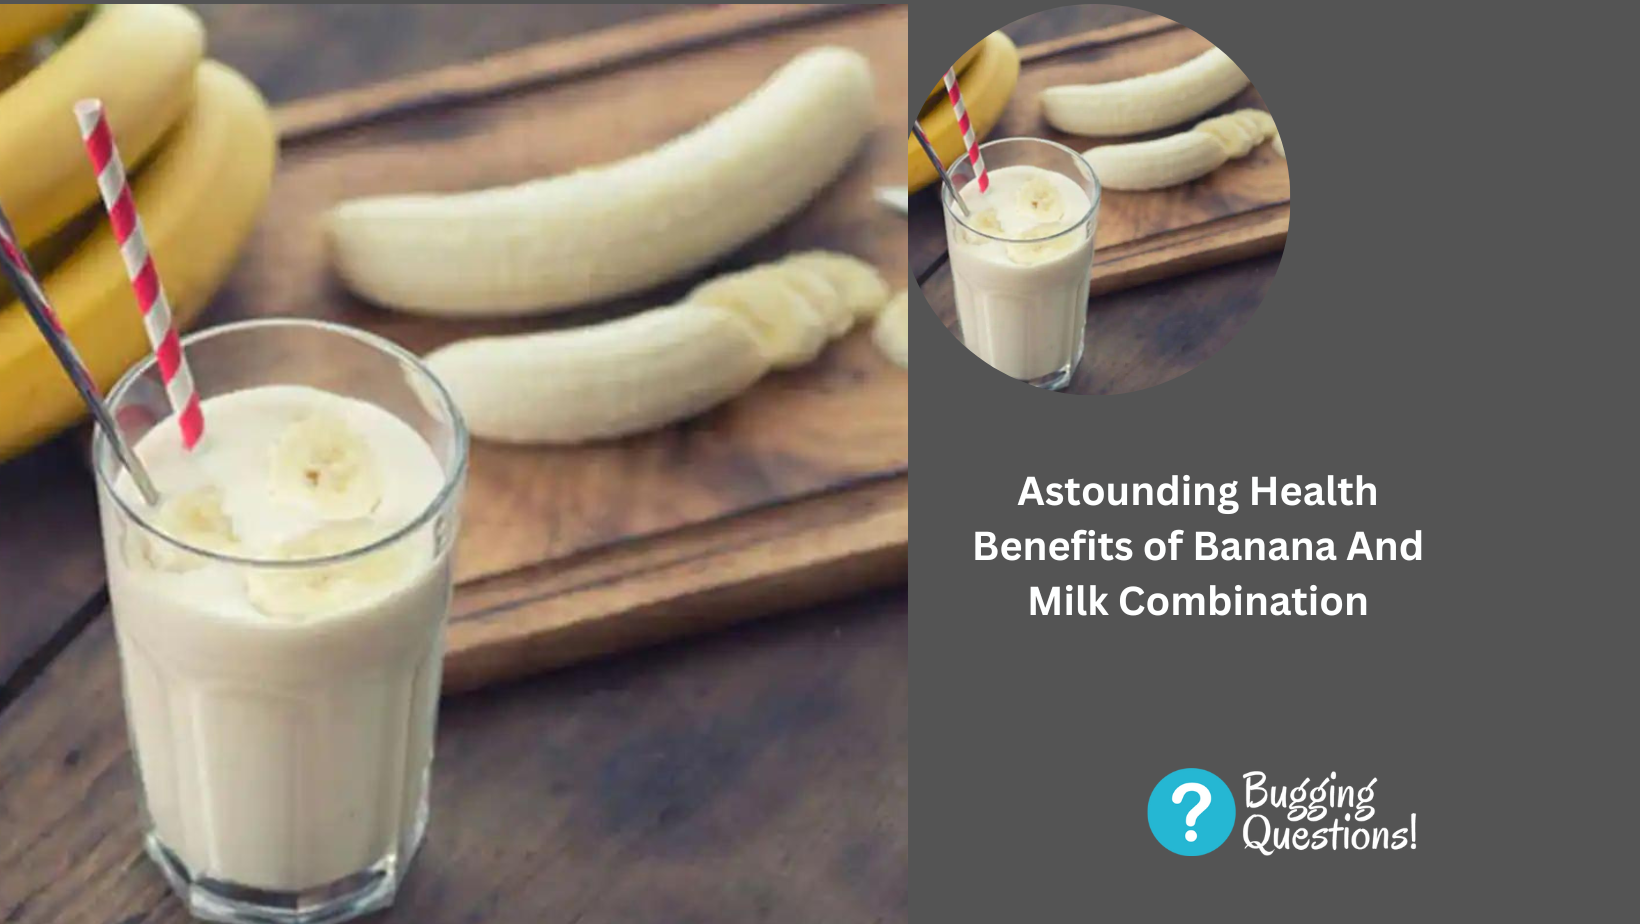 Astounding Health Benefits of Banana And Milk Combination